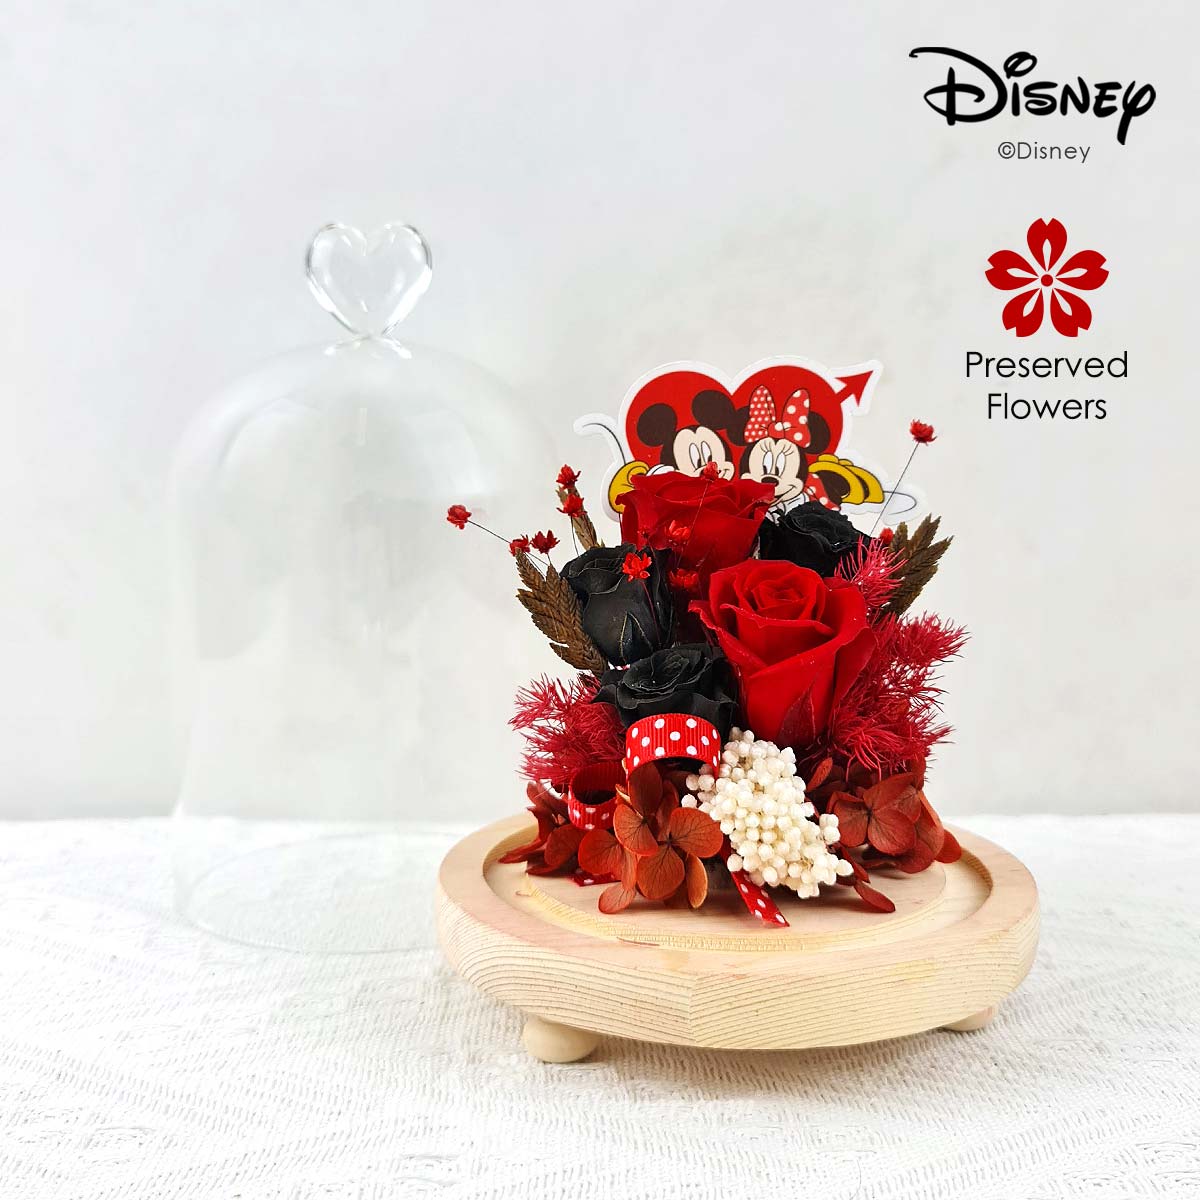 VDS2482_Disney Romance Disney Preserved Flowers_1B